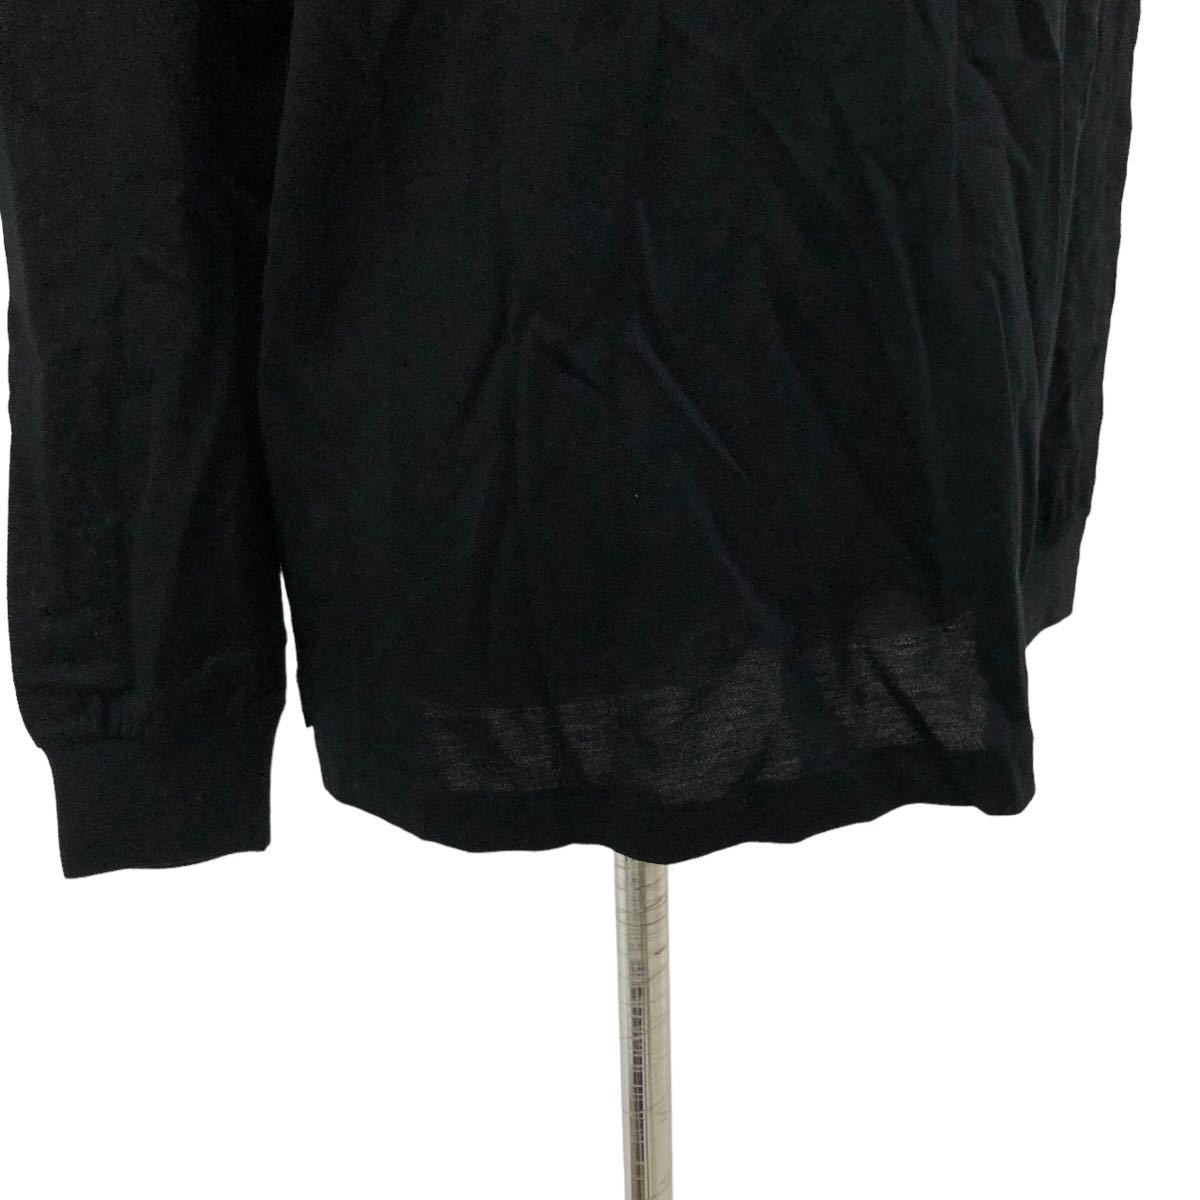 B312 日本製 VALENZA PO SPORTS バレンザポースポーツ 長袖 ポロシャツ シャツ トップス カットソー 綿 100% ブラック 黒 レディース 40_画像7